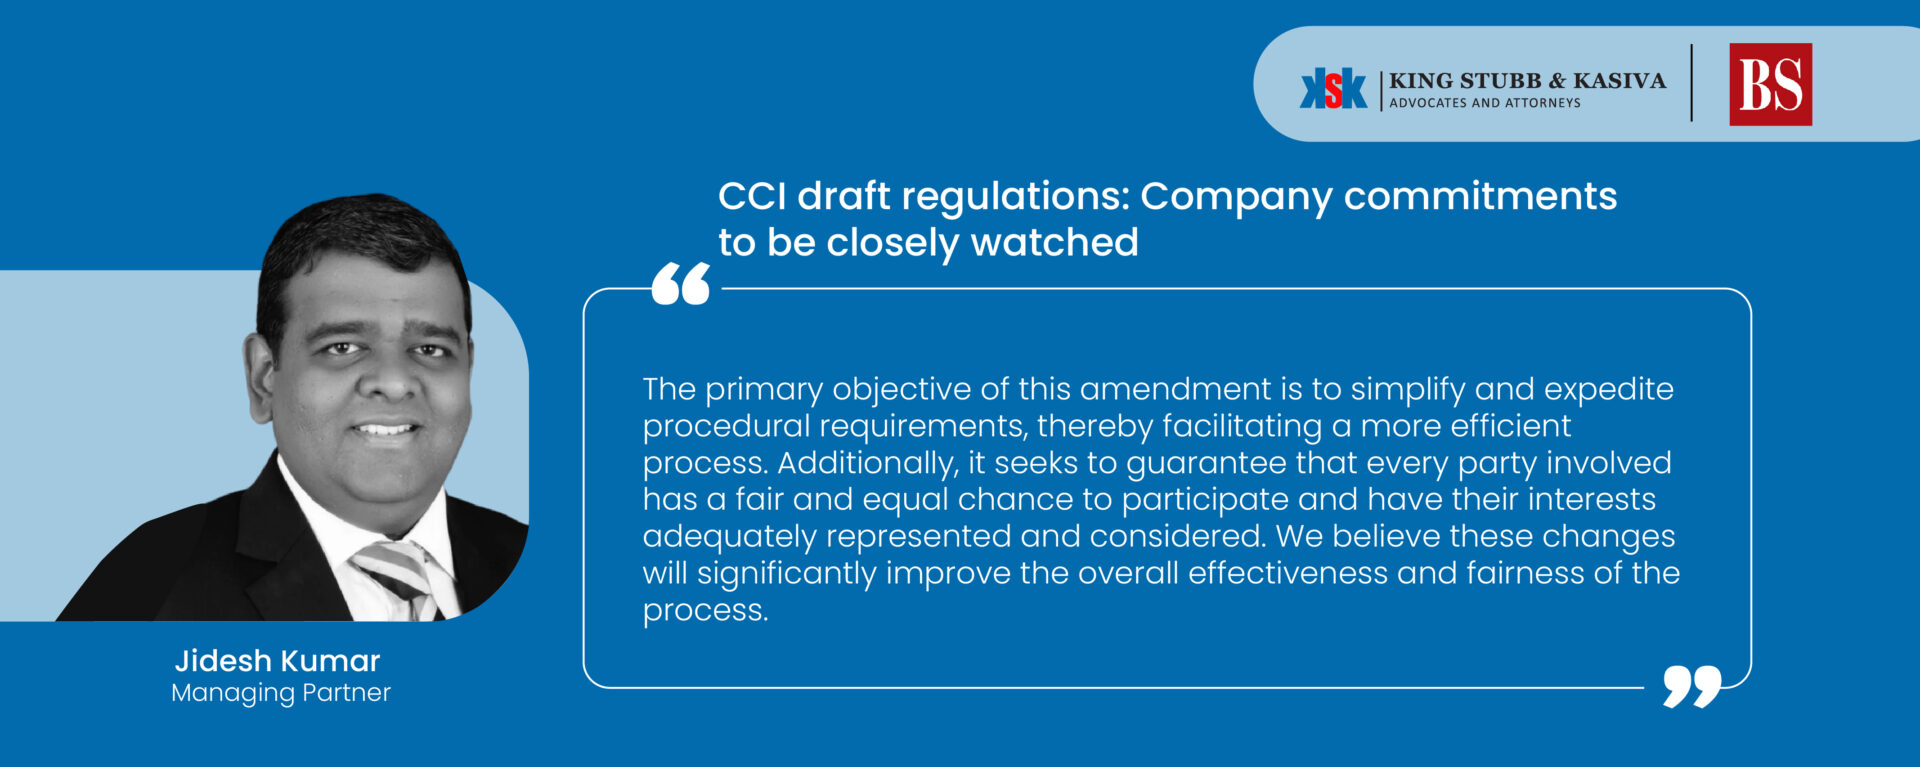 Jidesh Kumar Shares Insights on CCI Draft Regulations in Business Standard Article